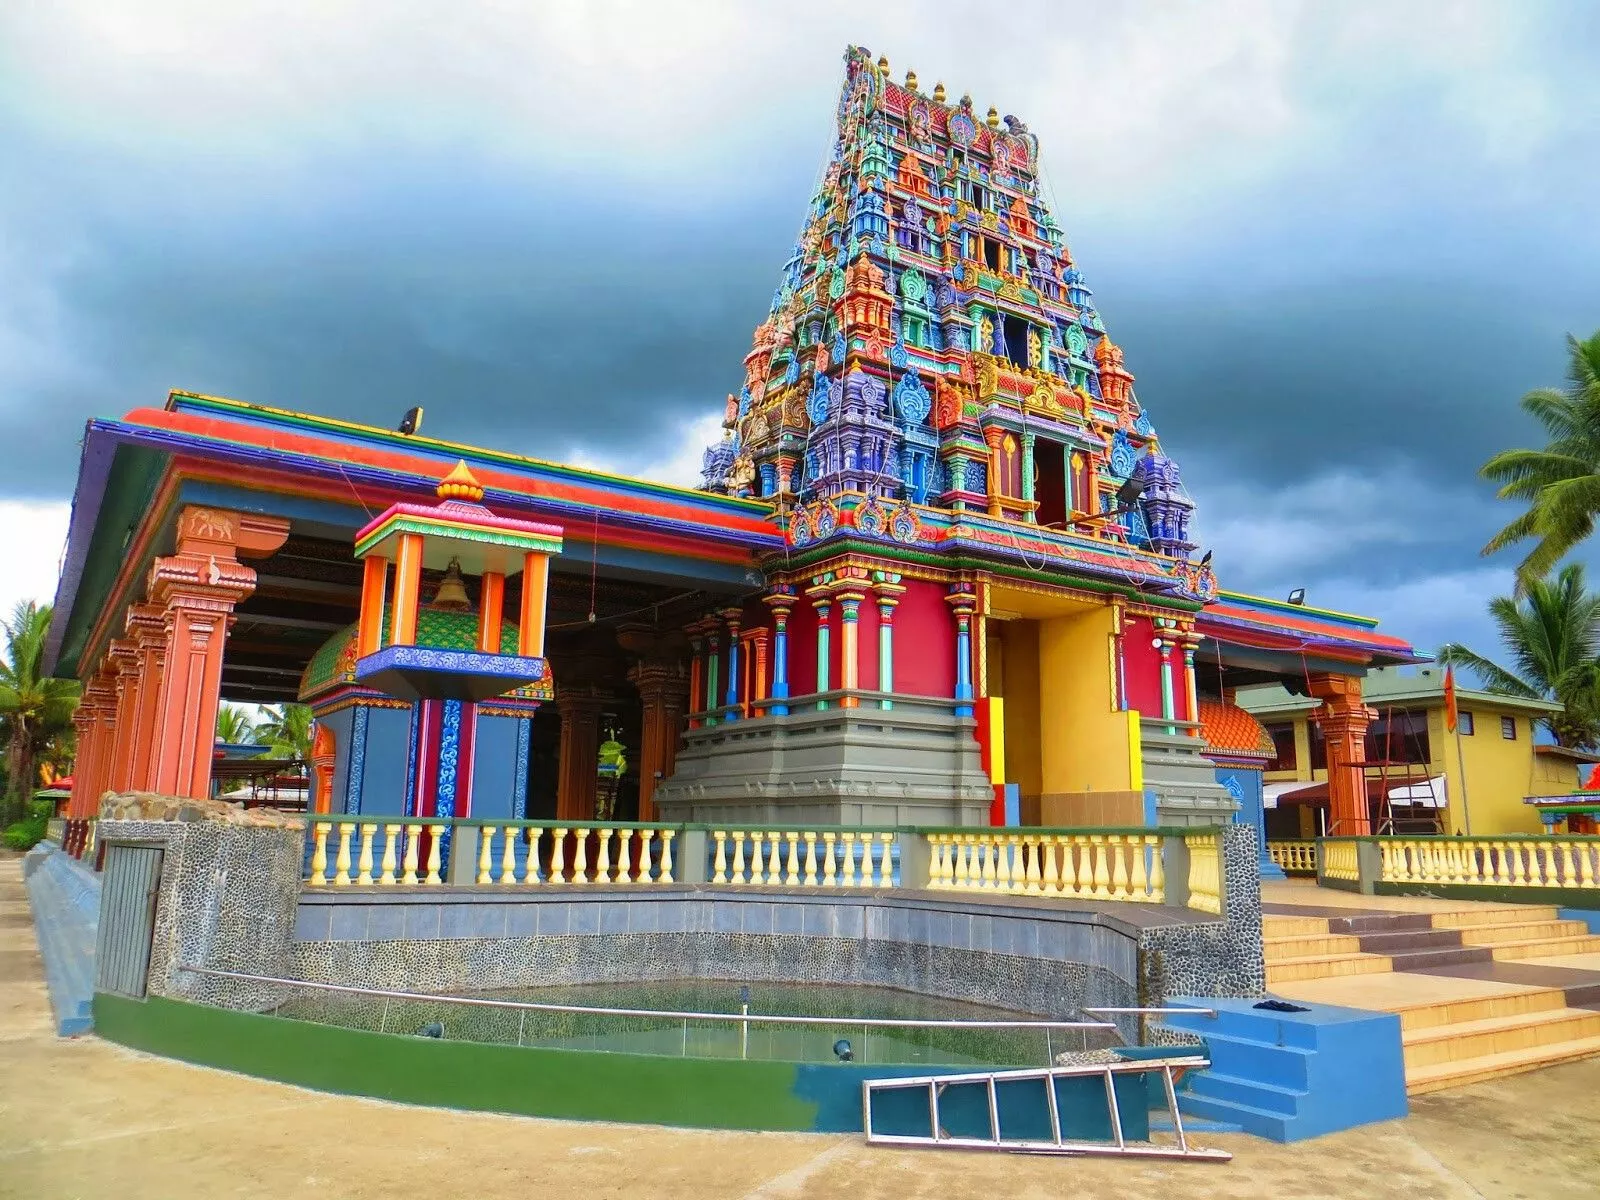 The Sri Siva Subramaniya Temple in Fiji, Australia and Oceania | Architecture - Rated 3.5